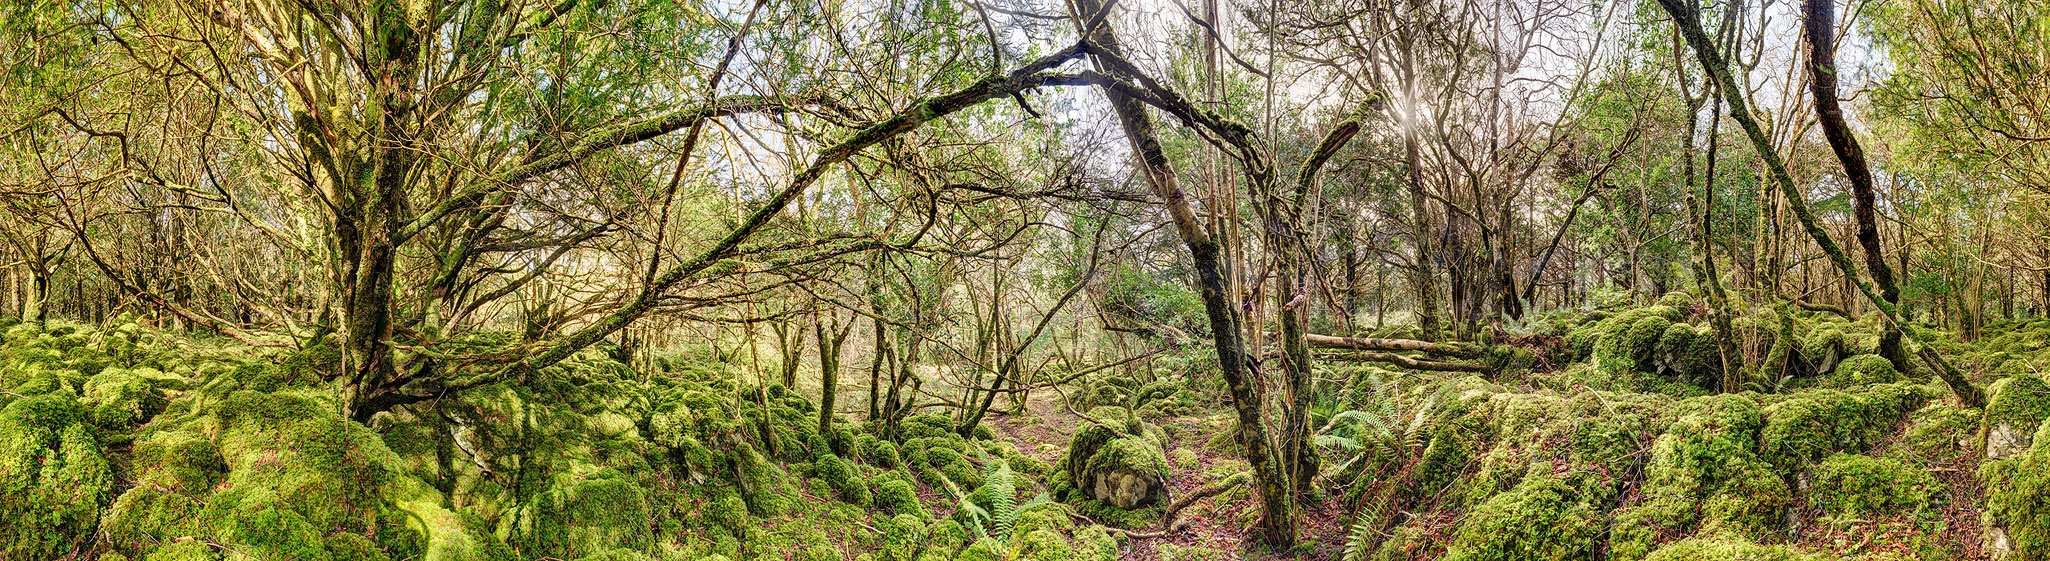 Yew Forest Killarney National Park Photographs of Ireland